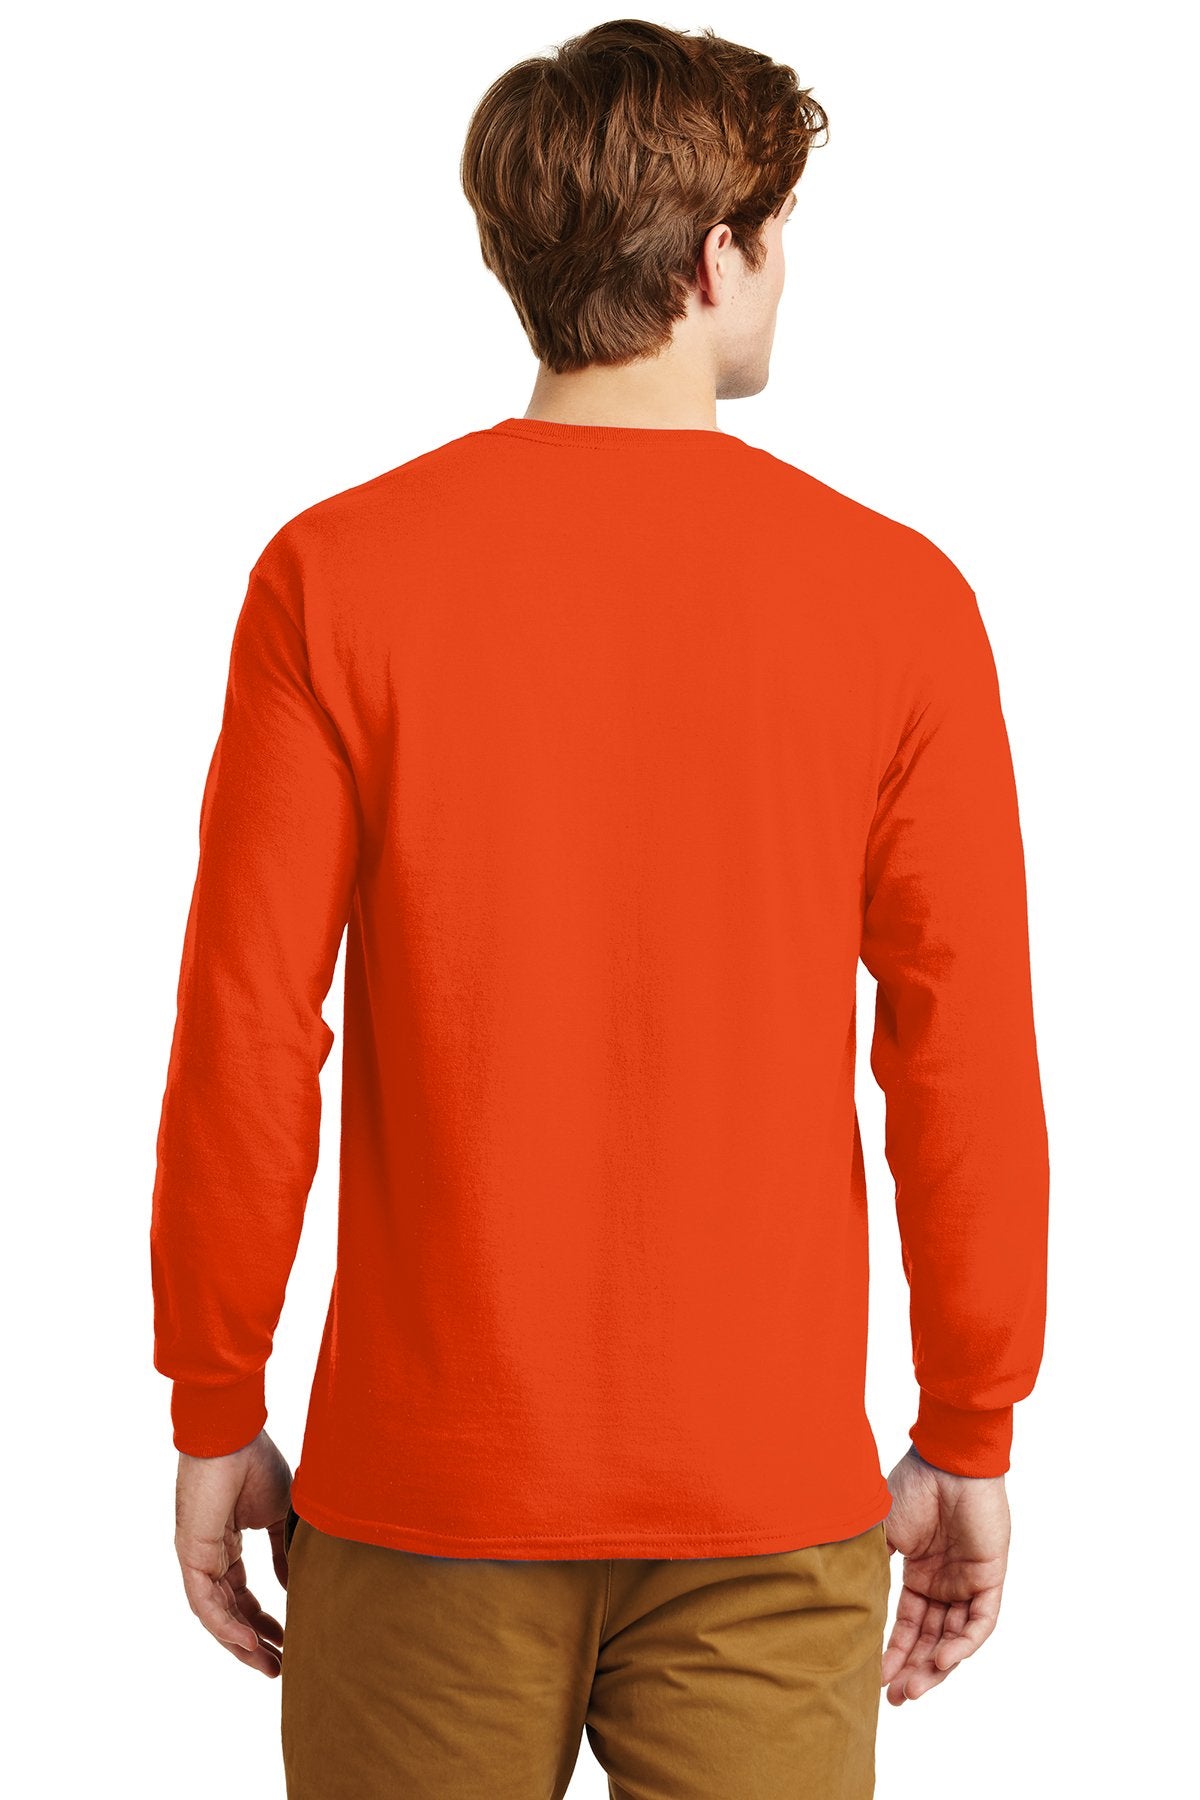 gildan ultra cotton long sleeve t shirt g2400 orange